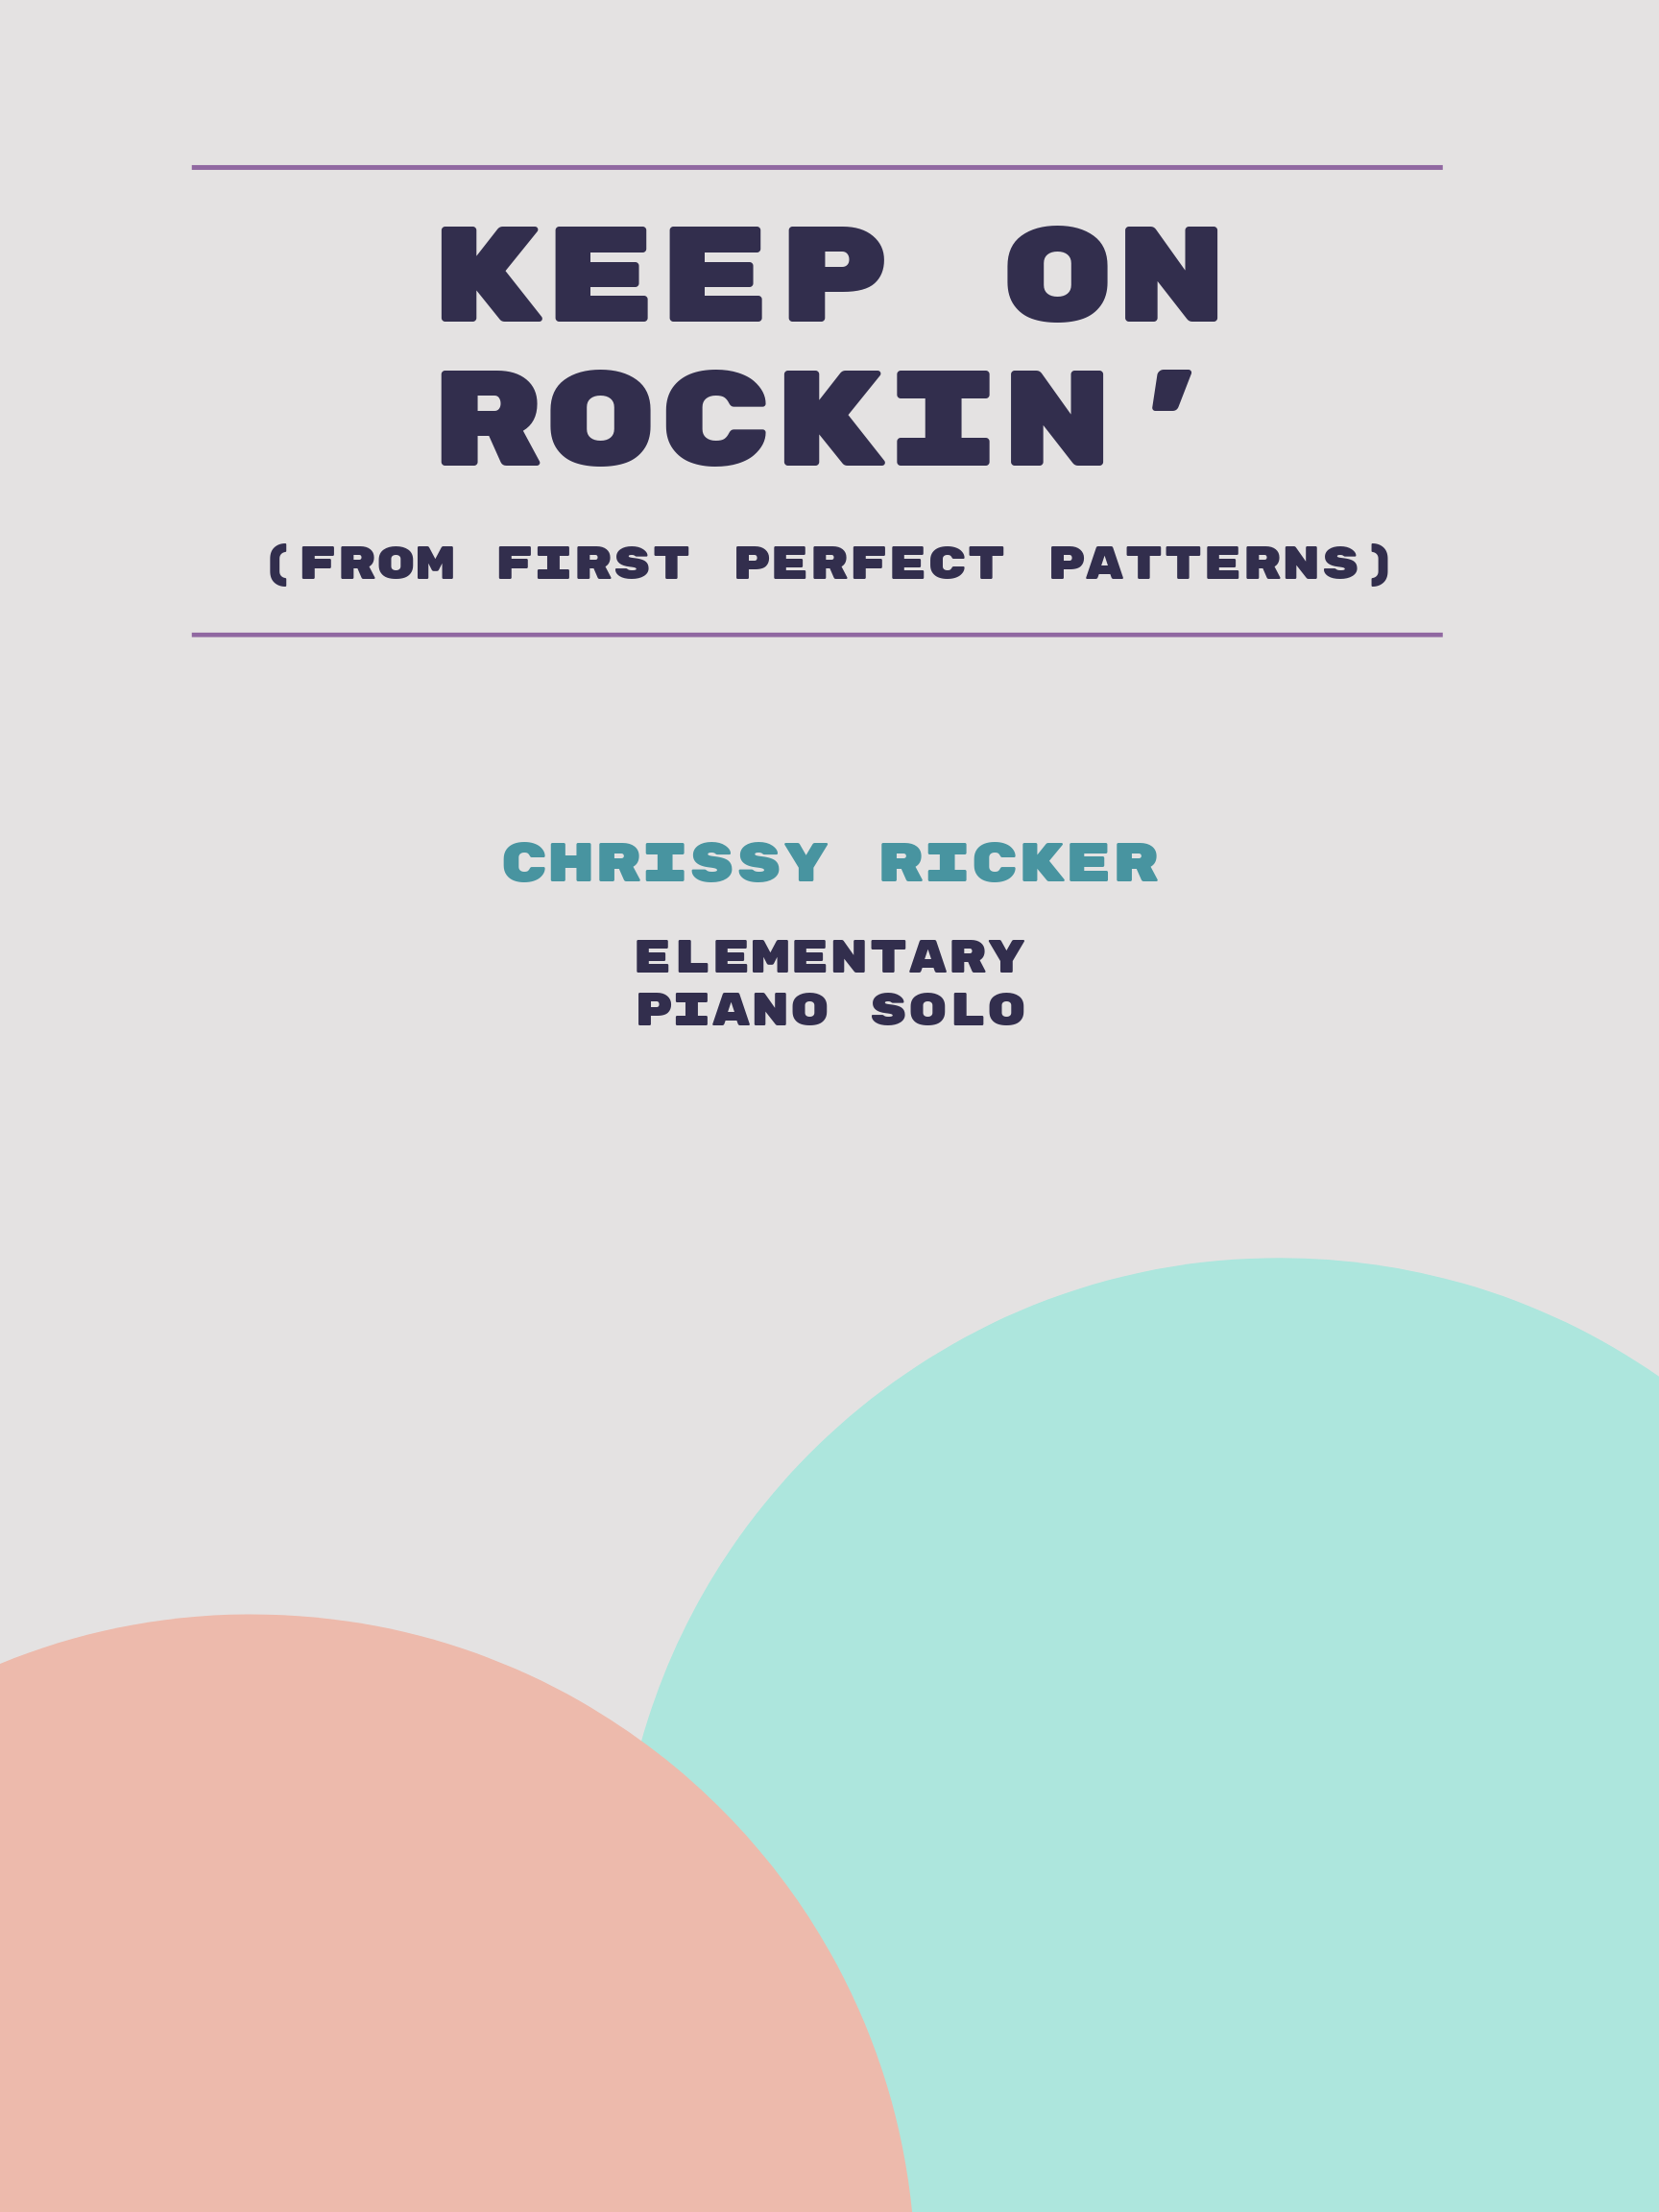 Keep on Rockin' by Chrissy Ricker